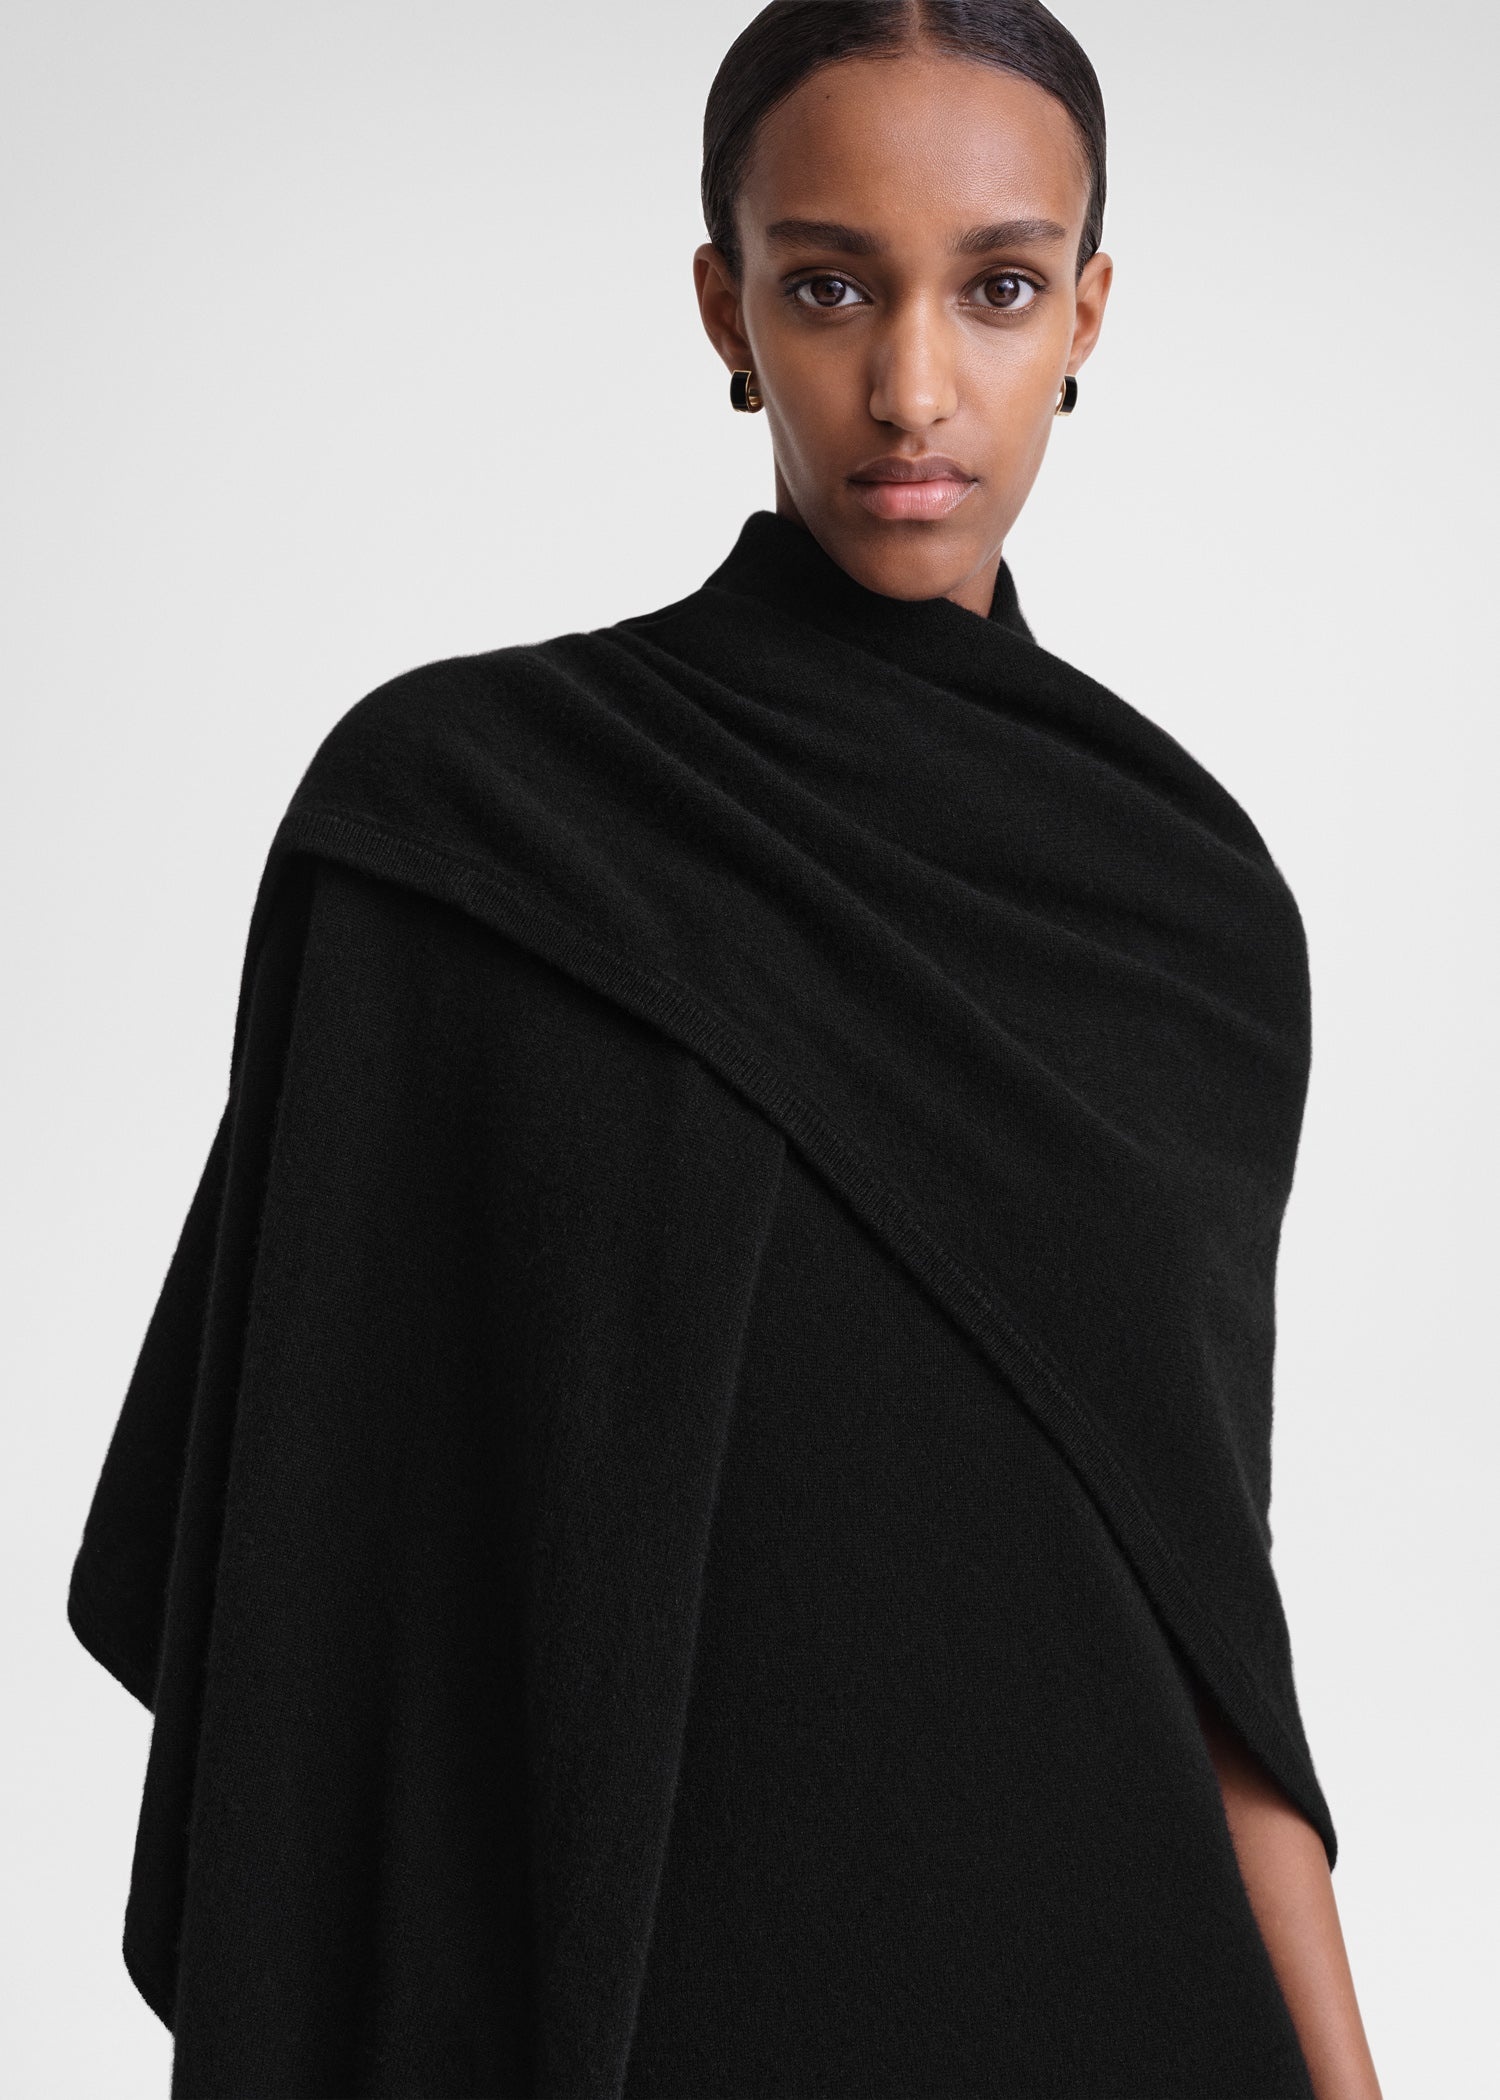 Cashmere shawl dress black - 5